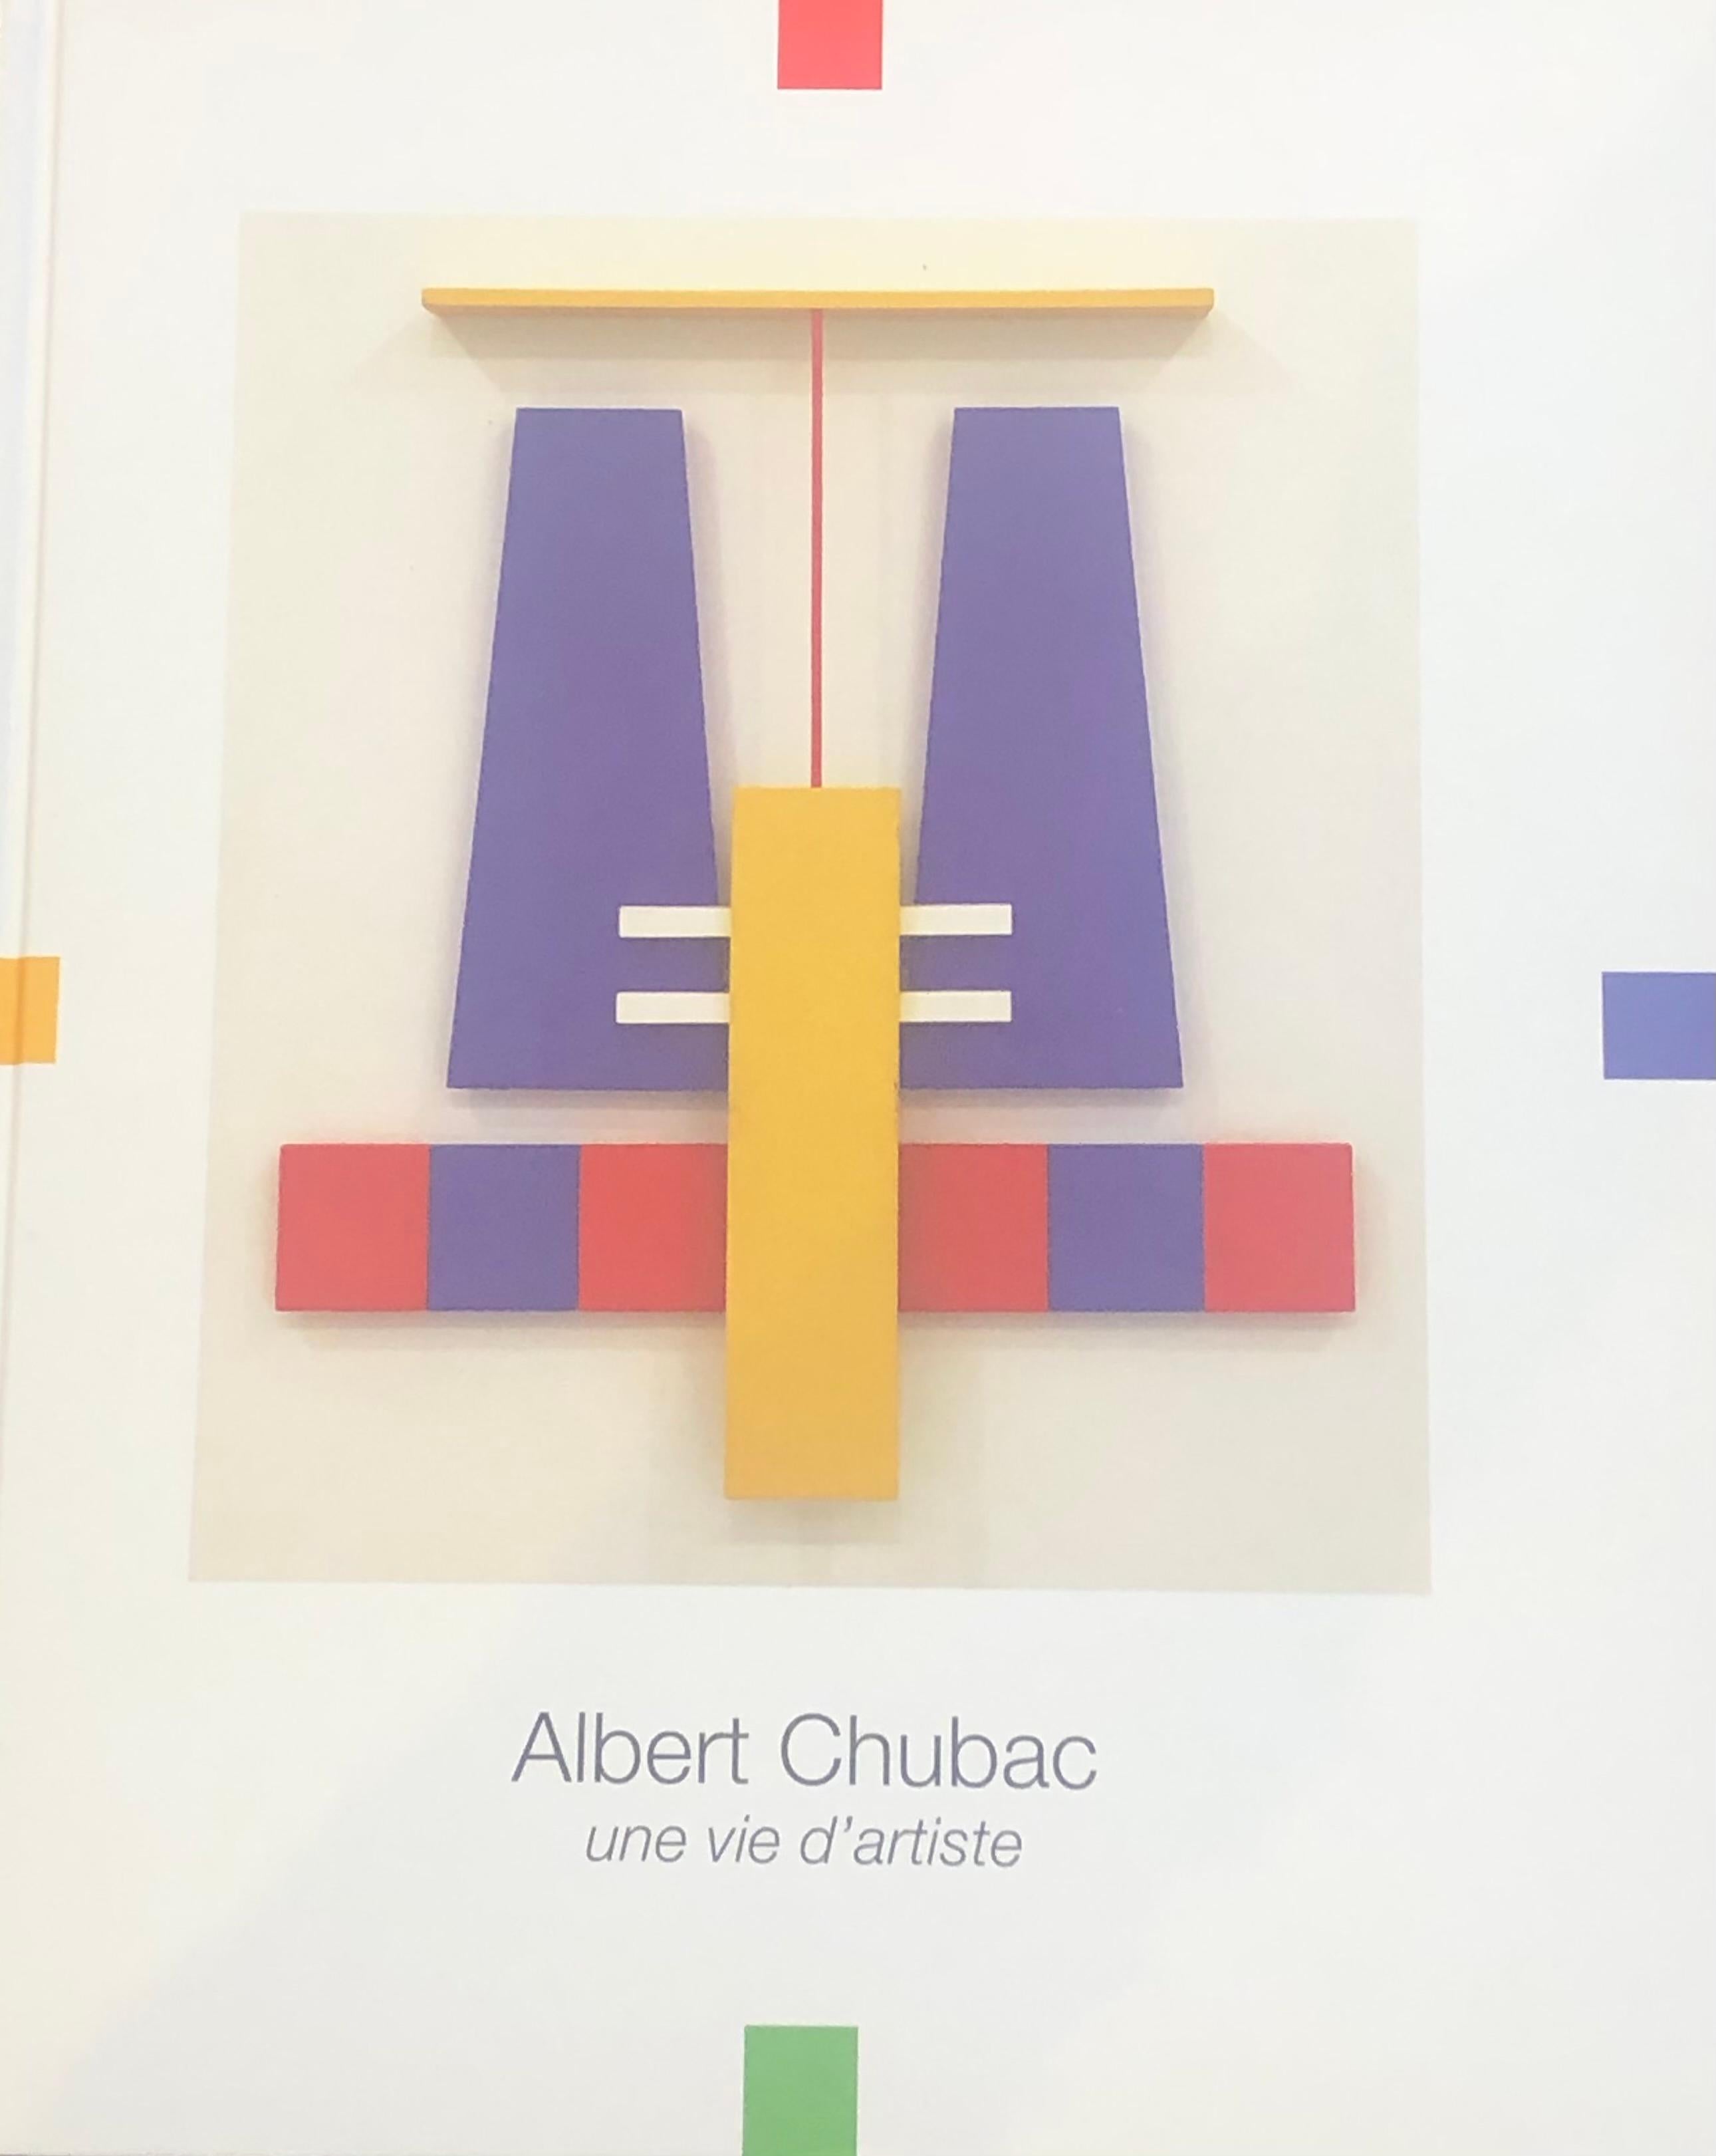 Albert Chubac, Cinetic Sculpture, 